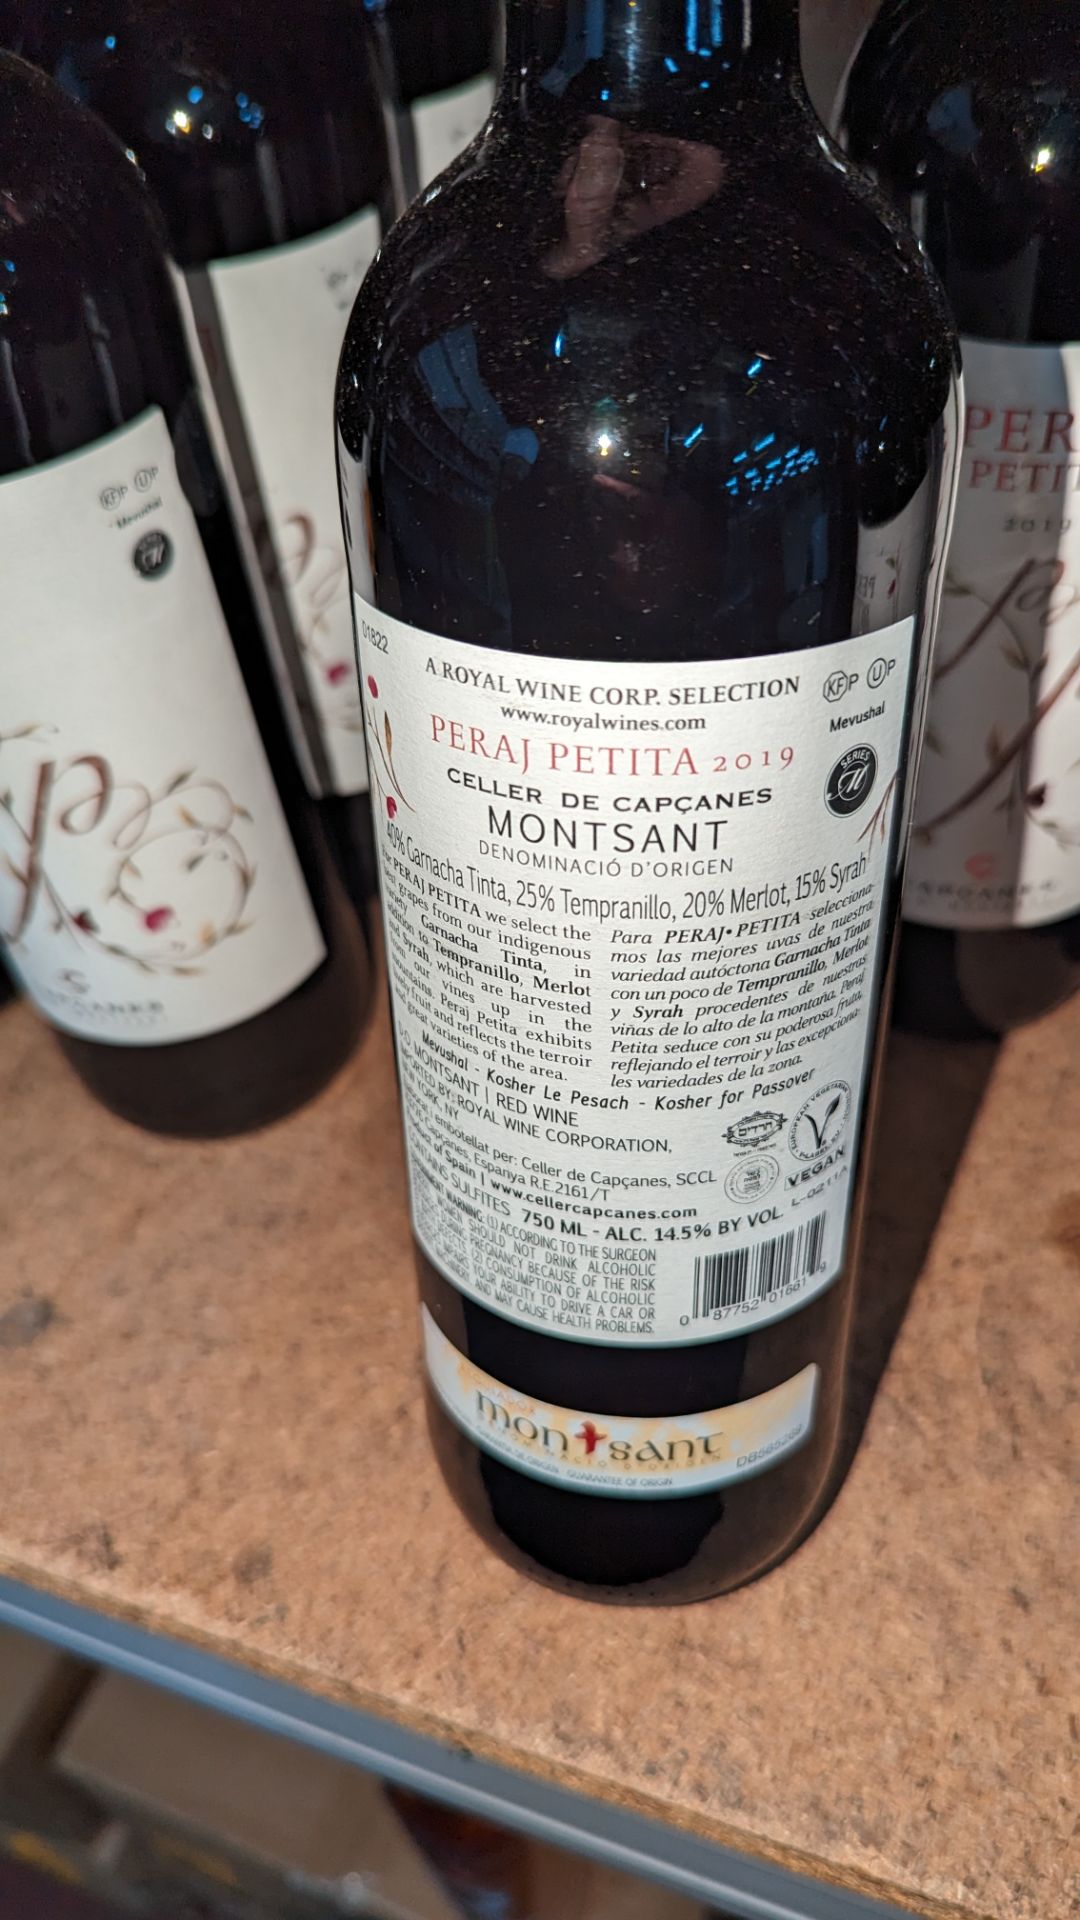 14 bottles of Celler de Capcanes Peraj Petita 2019 Spanish red wine sold under AWRS number XQAW00000 - Image 3 of 3